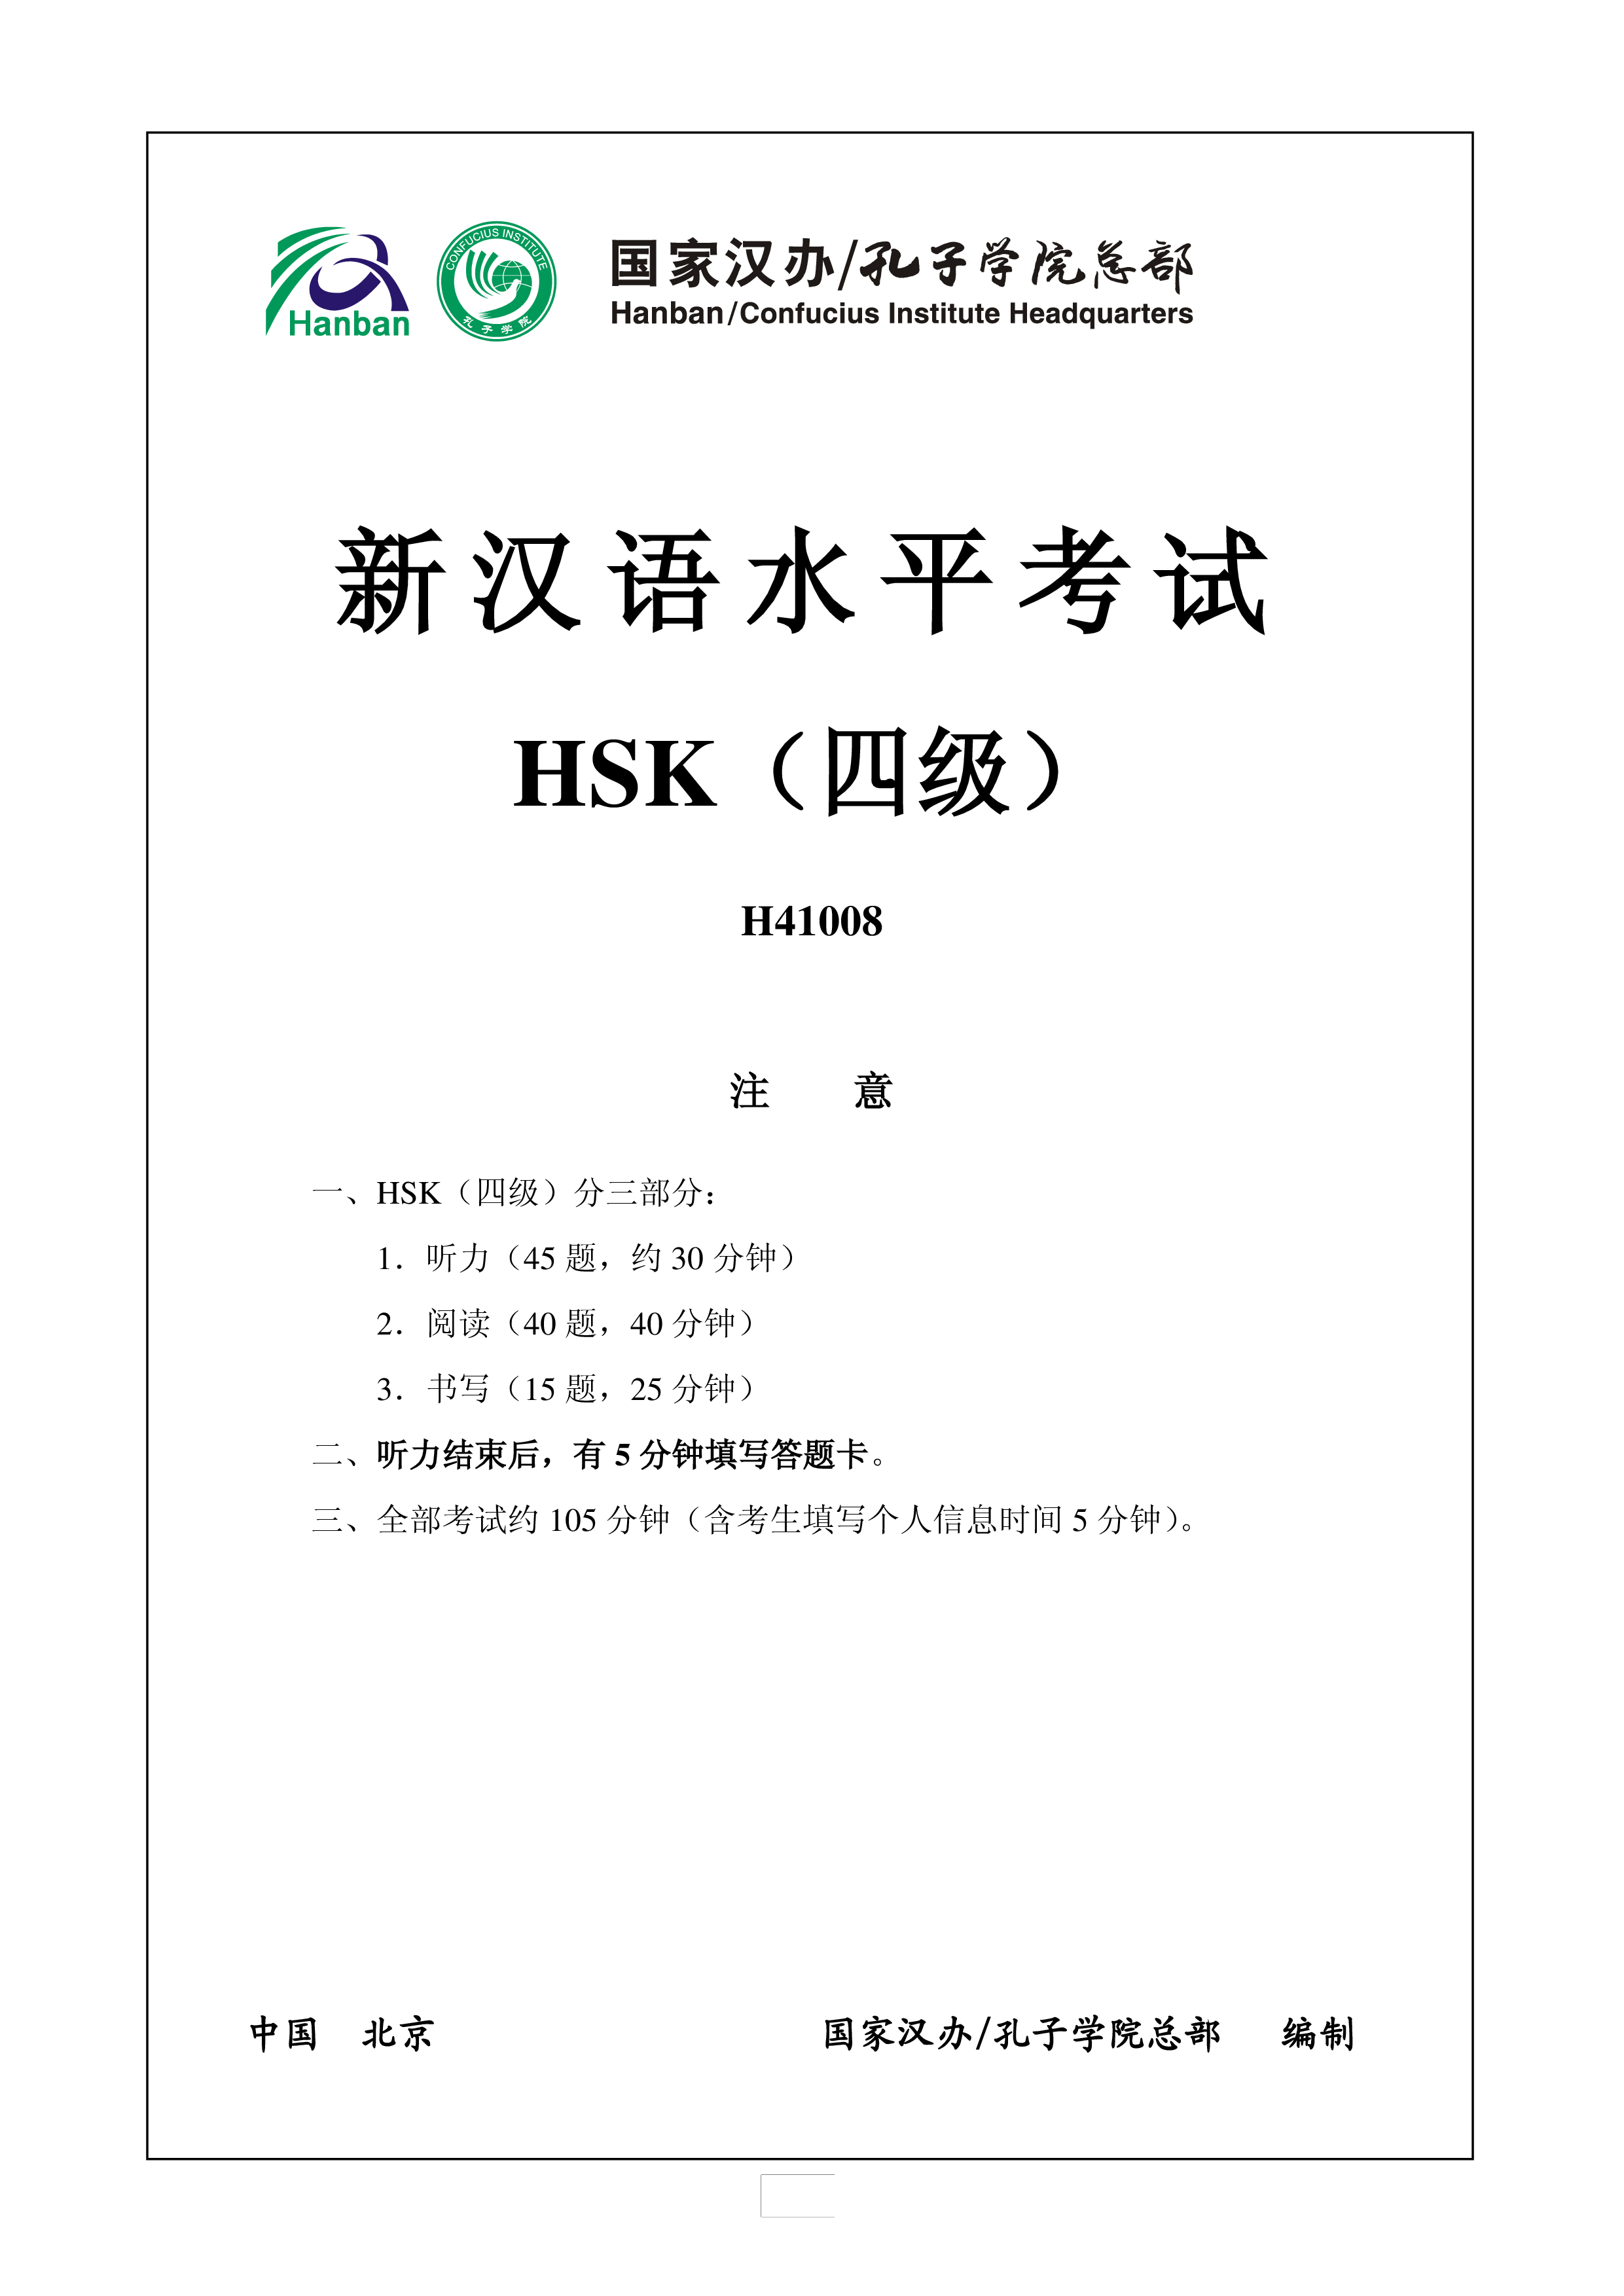 hsk 4 chinees examen audio en antwoorden h41008 plantilla imagen principal